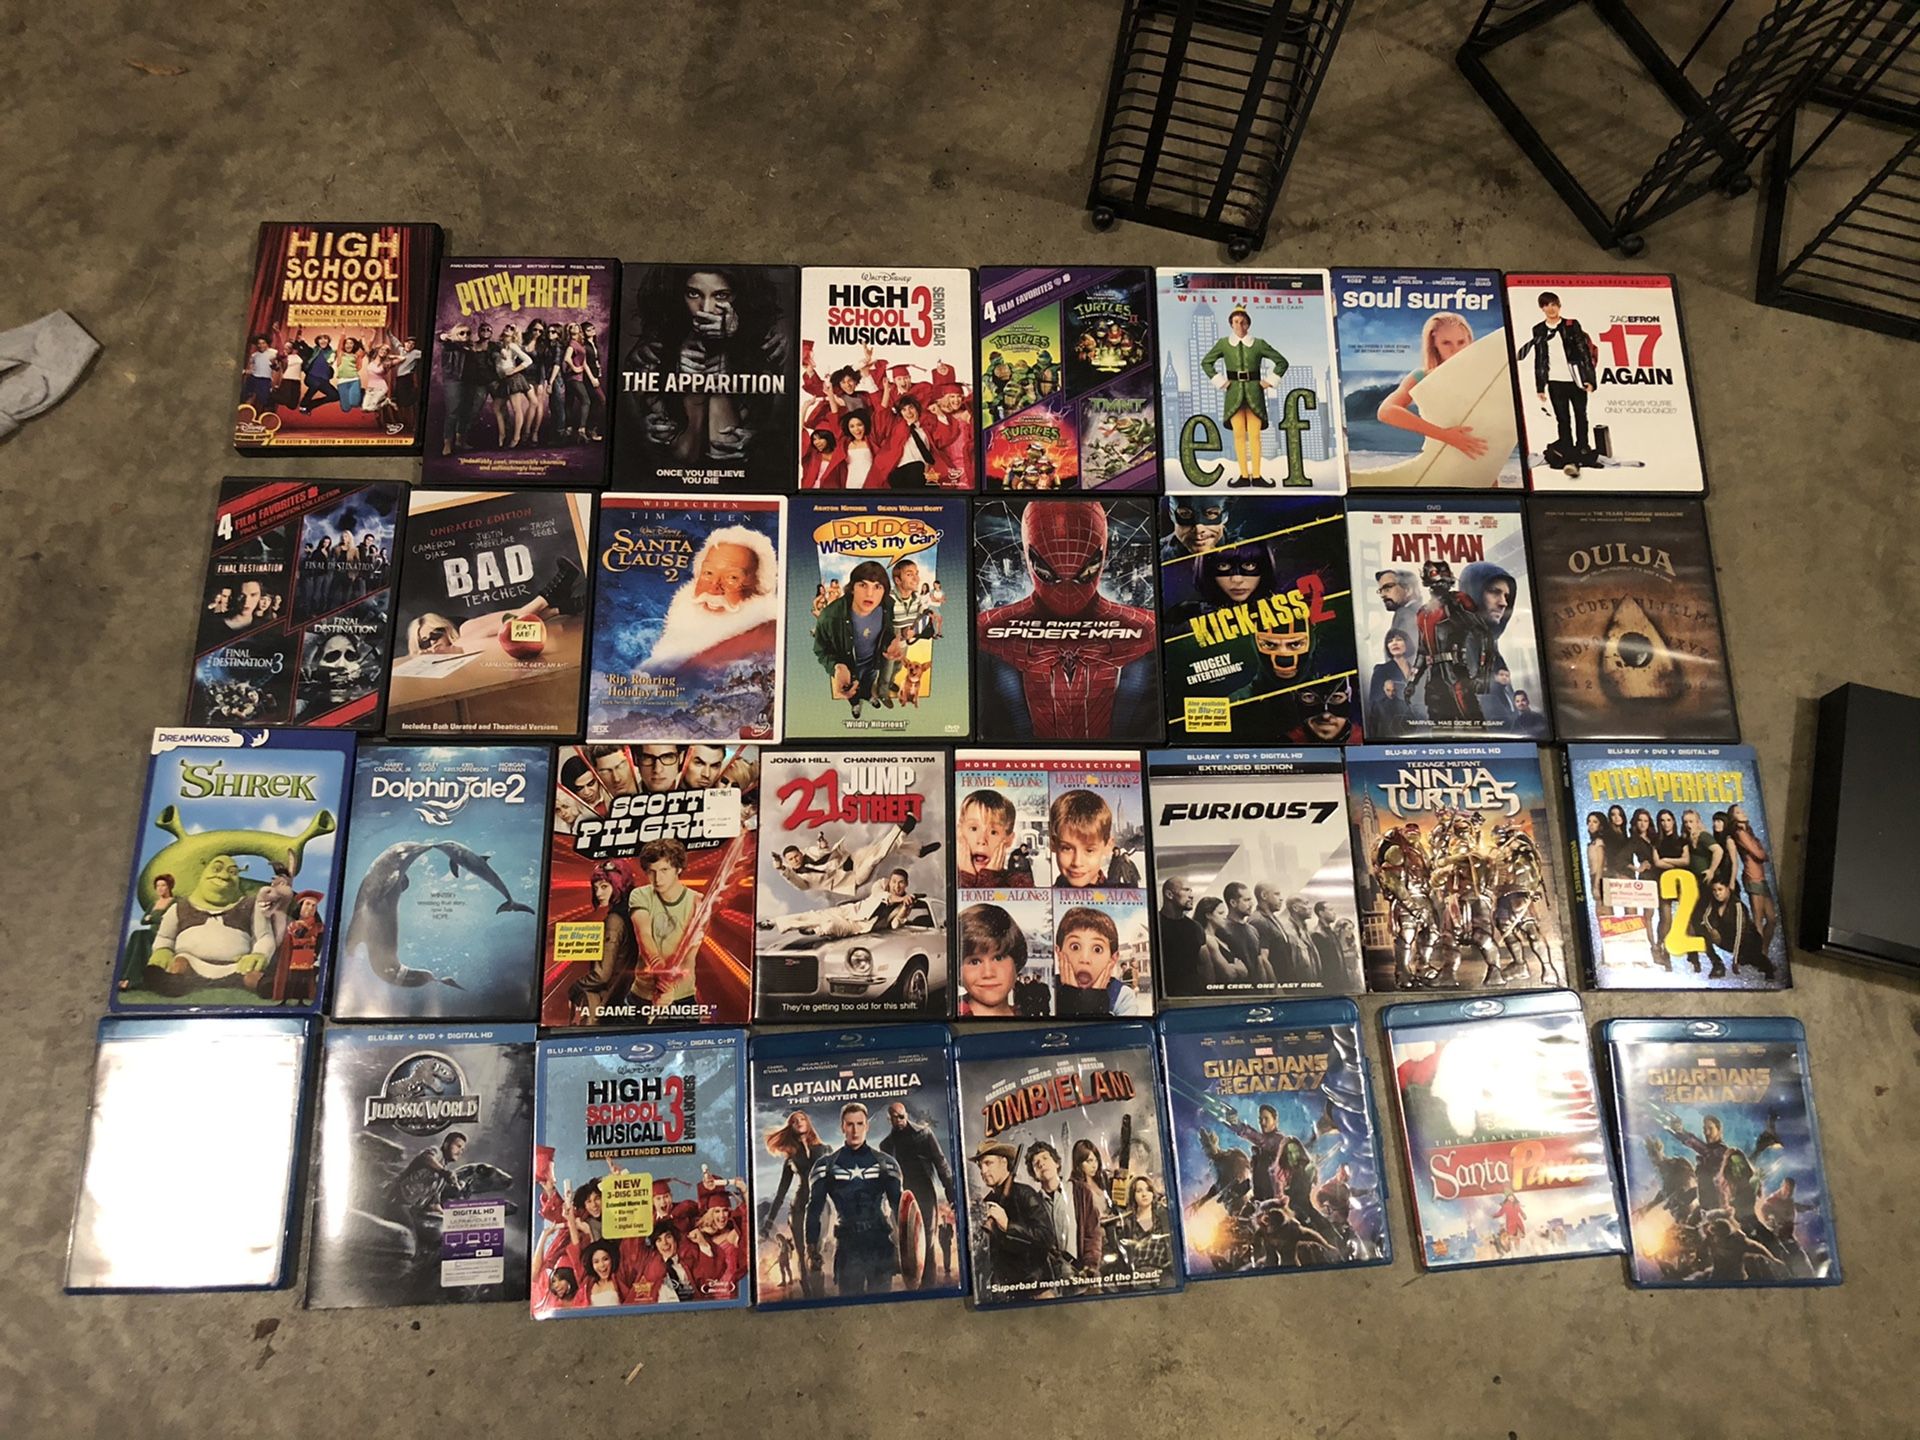 Blu-ray DVD player racks and movies